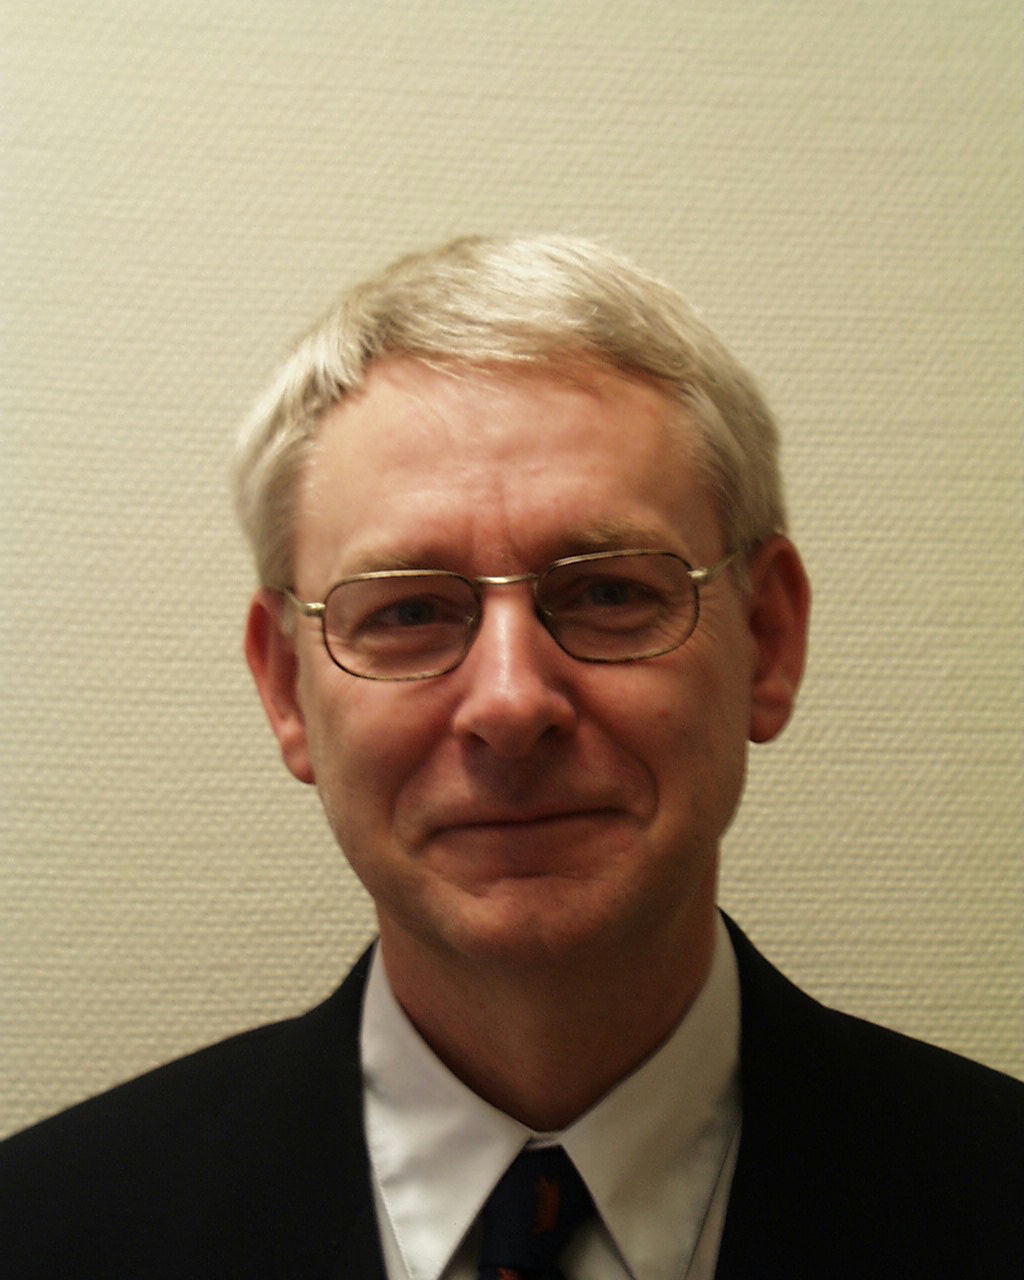 Lennart Klerdal, Chairman Of The Board, Swedish Rail Industry Group SWERIG